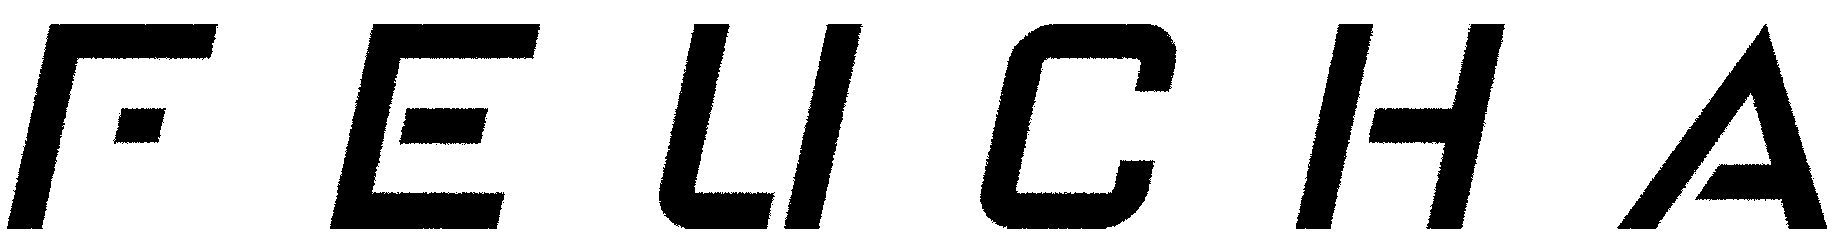 Feucha Inc. Logo - Black